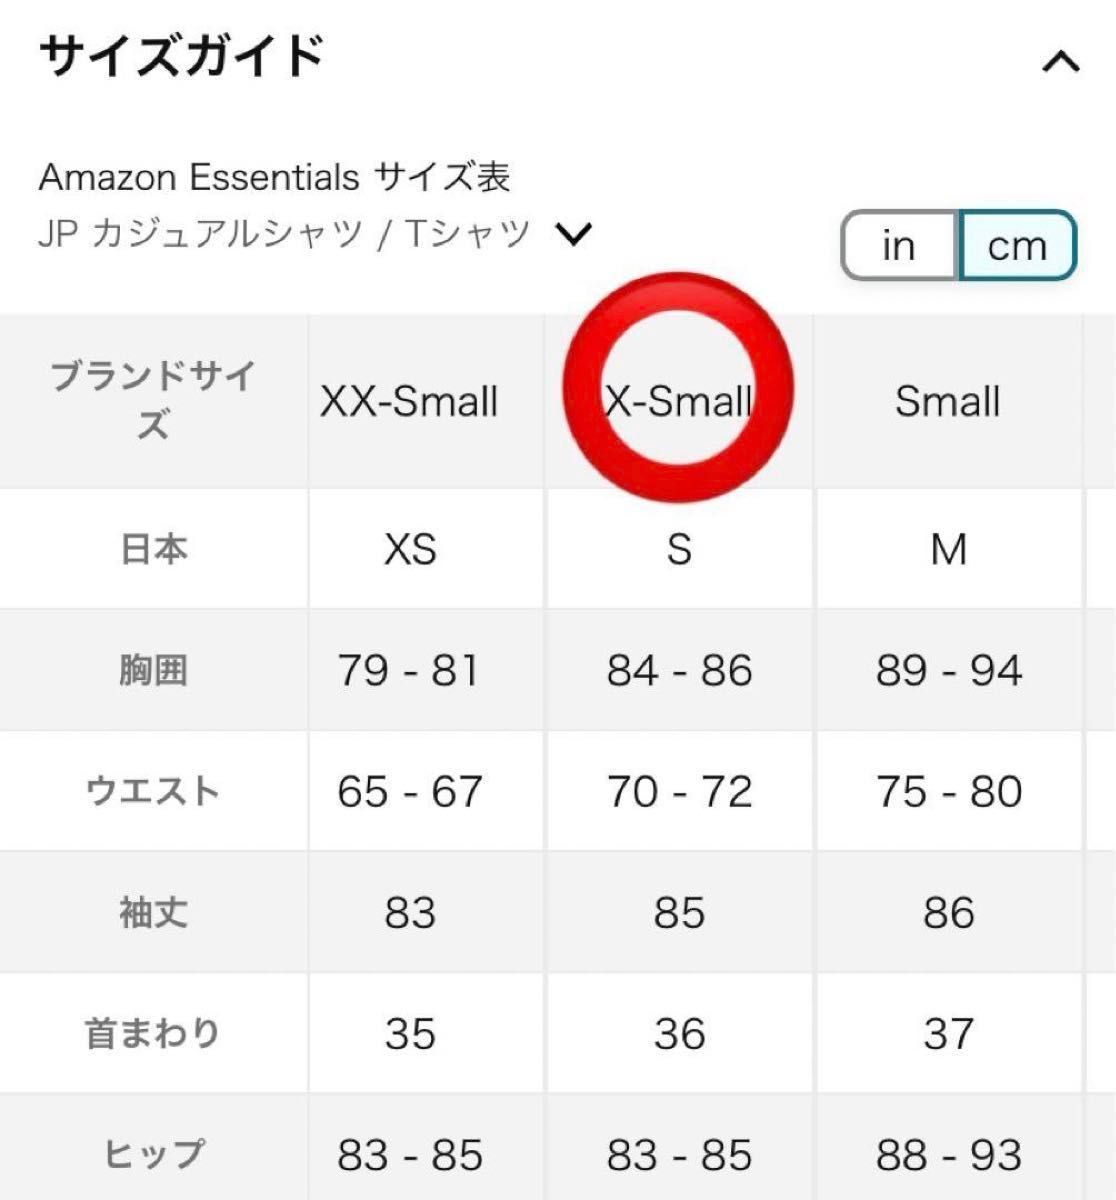 ☆ Amazon Essentials ポロシャツ コットンピケ フィット